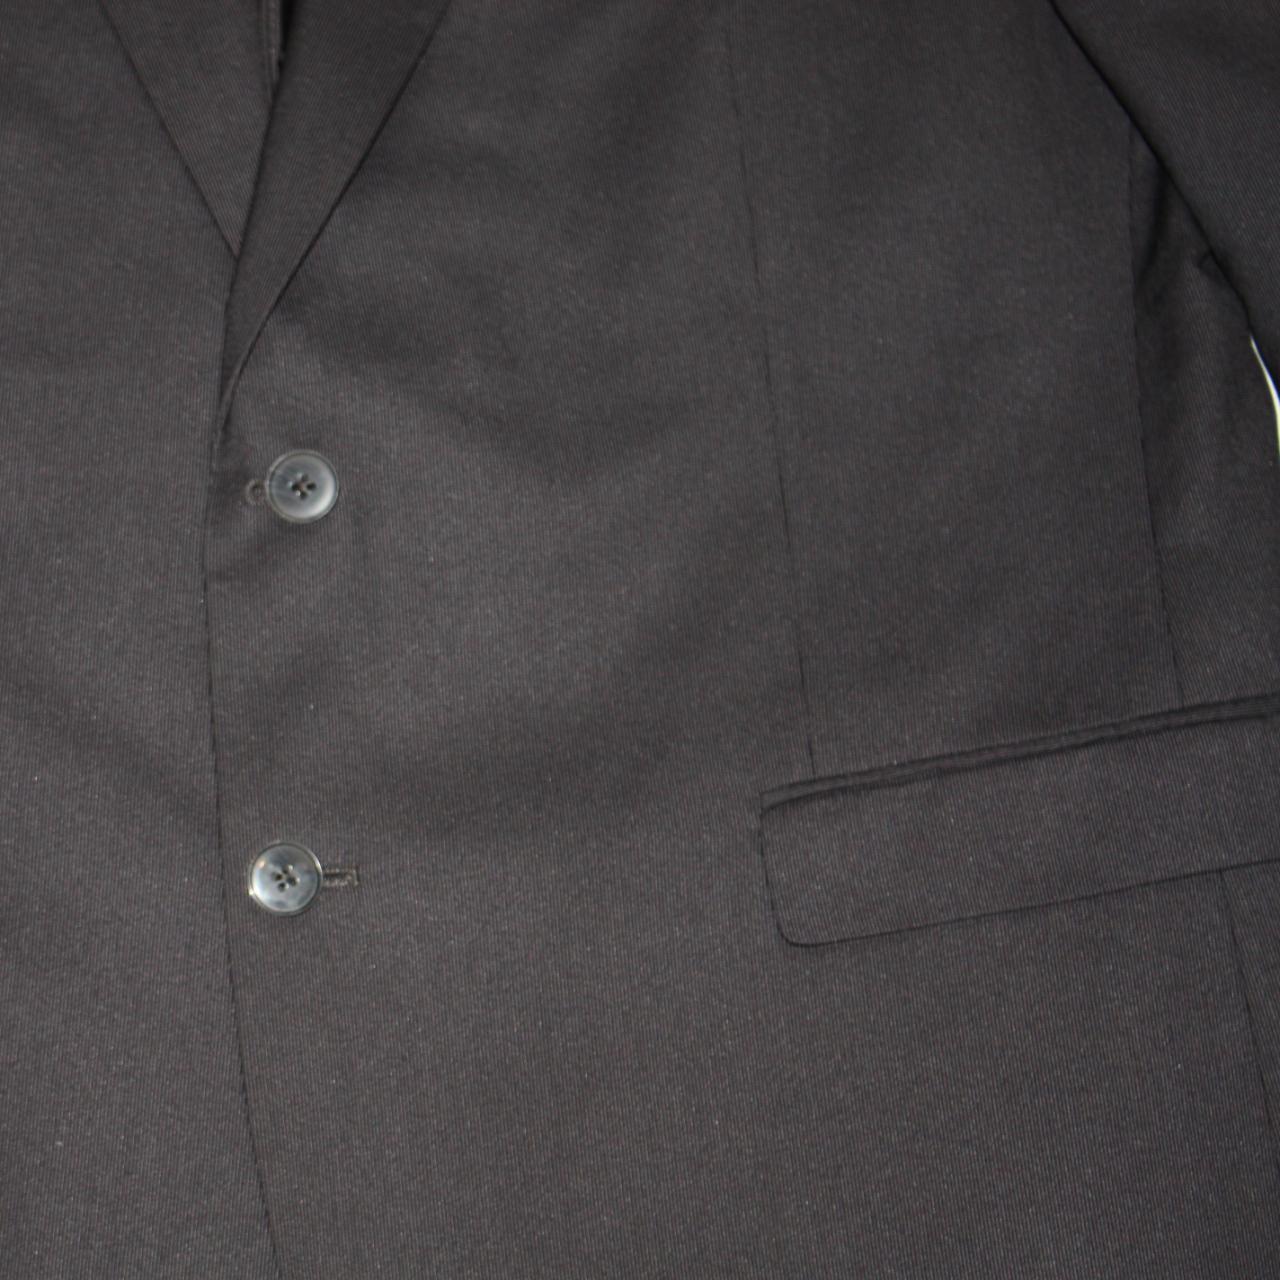 Mexx Metropolitan Men's Black Suit Jacket Blazer... - Depop